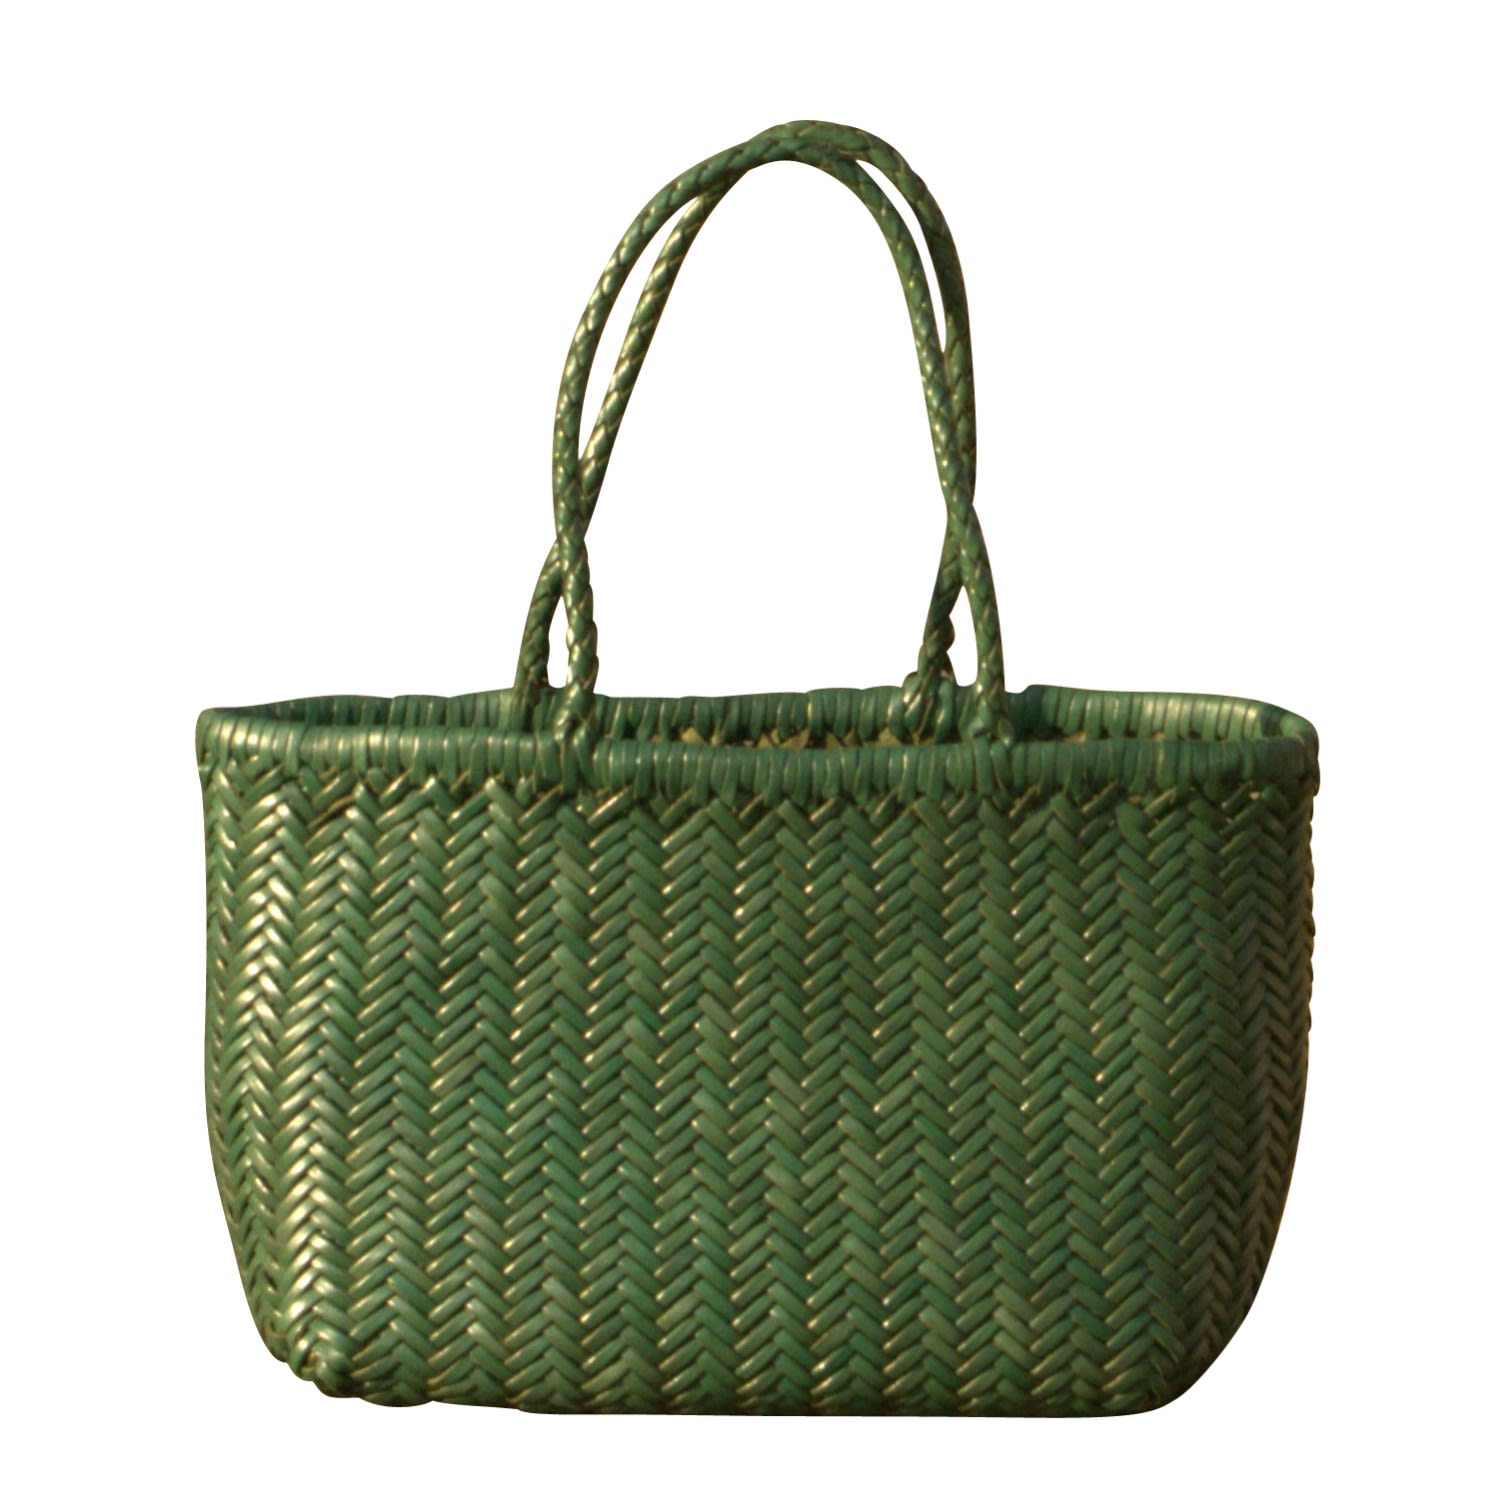 Women’s Zigzag Woven Leather Handbag ’Viviana’ Medium Size - Green Rimini